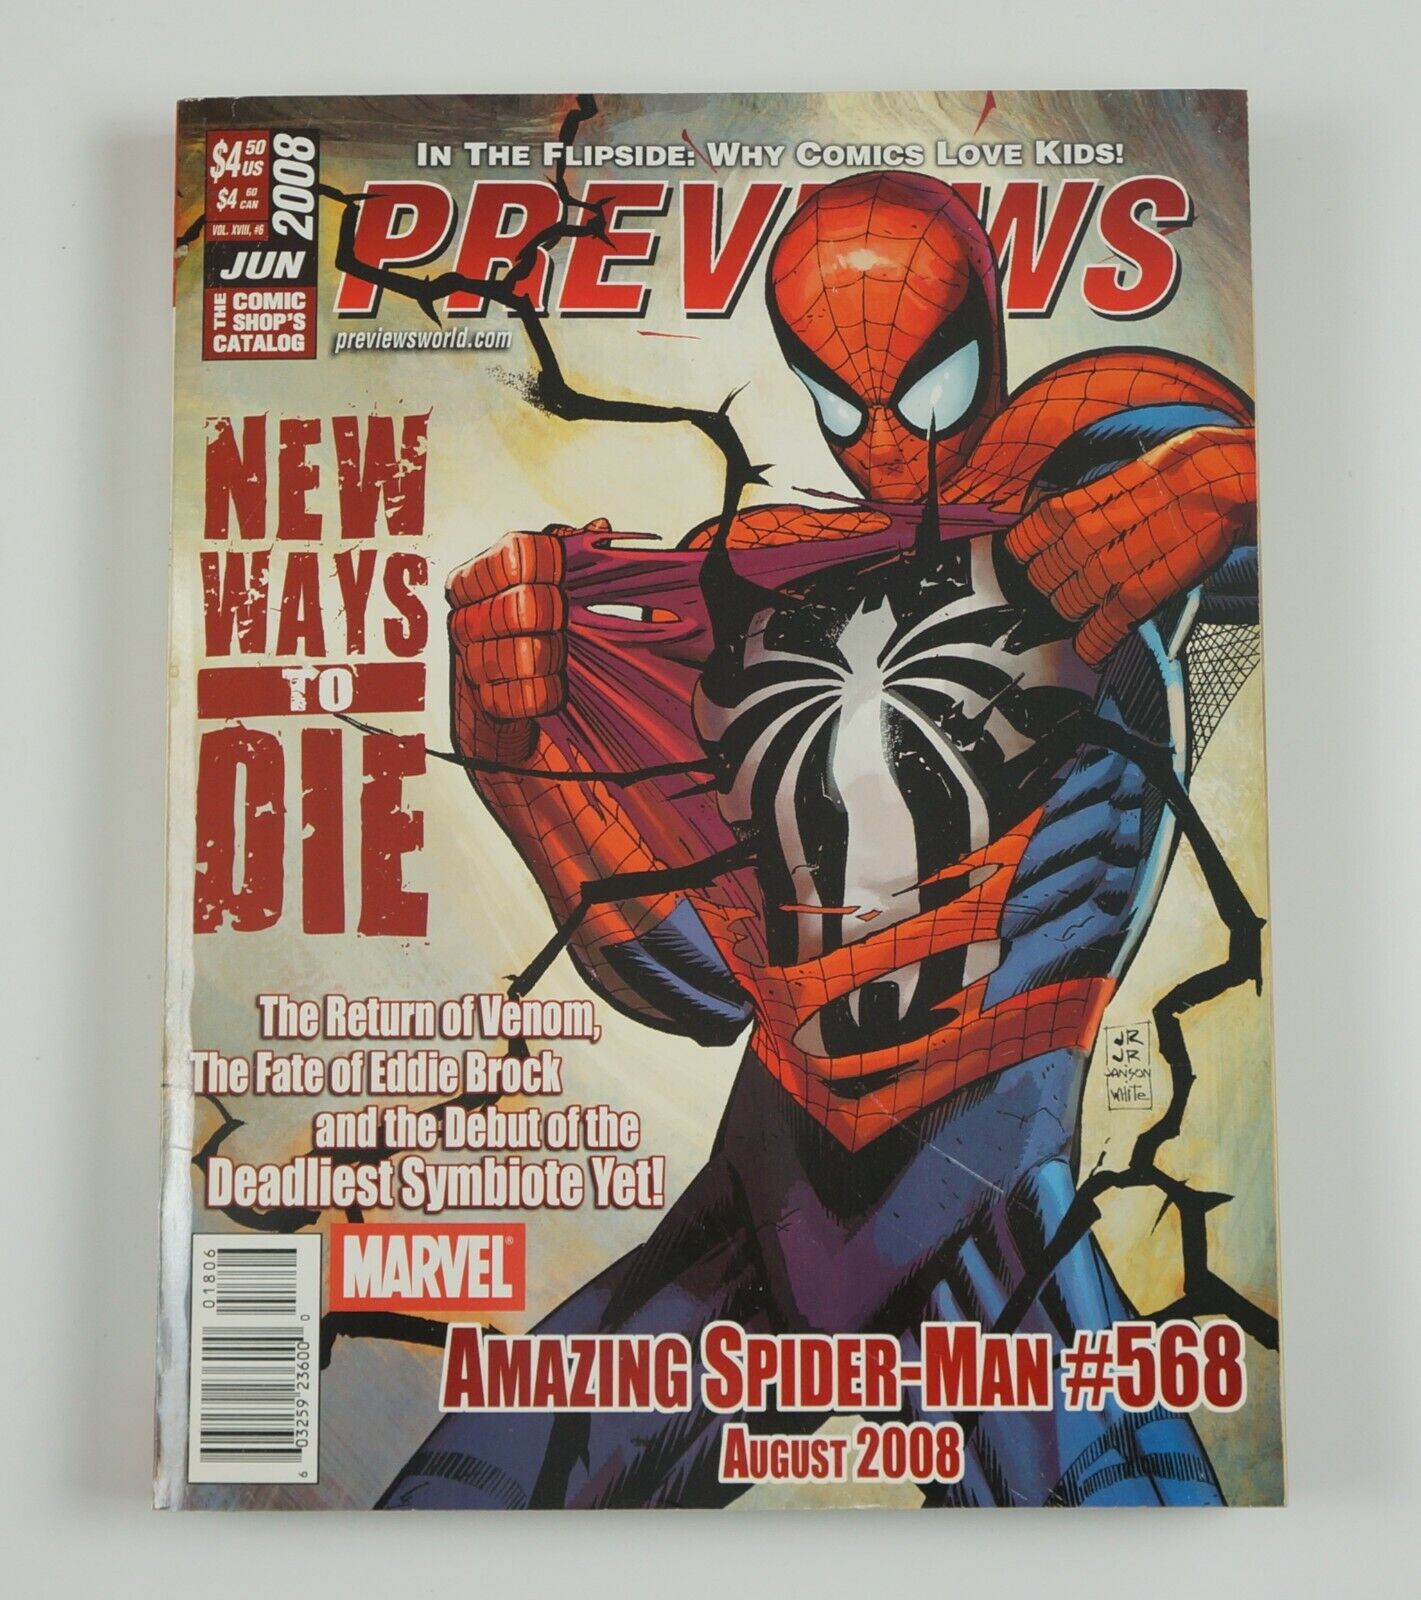 Previews Vol 18 #6 June 2008 - Anti-Venom (precedes Amazing Spider-Man #568)